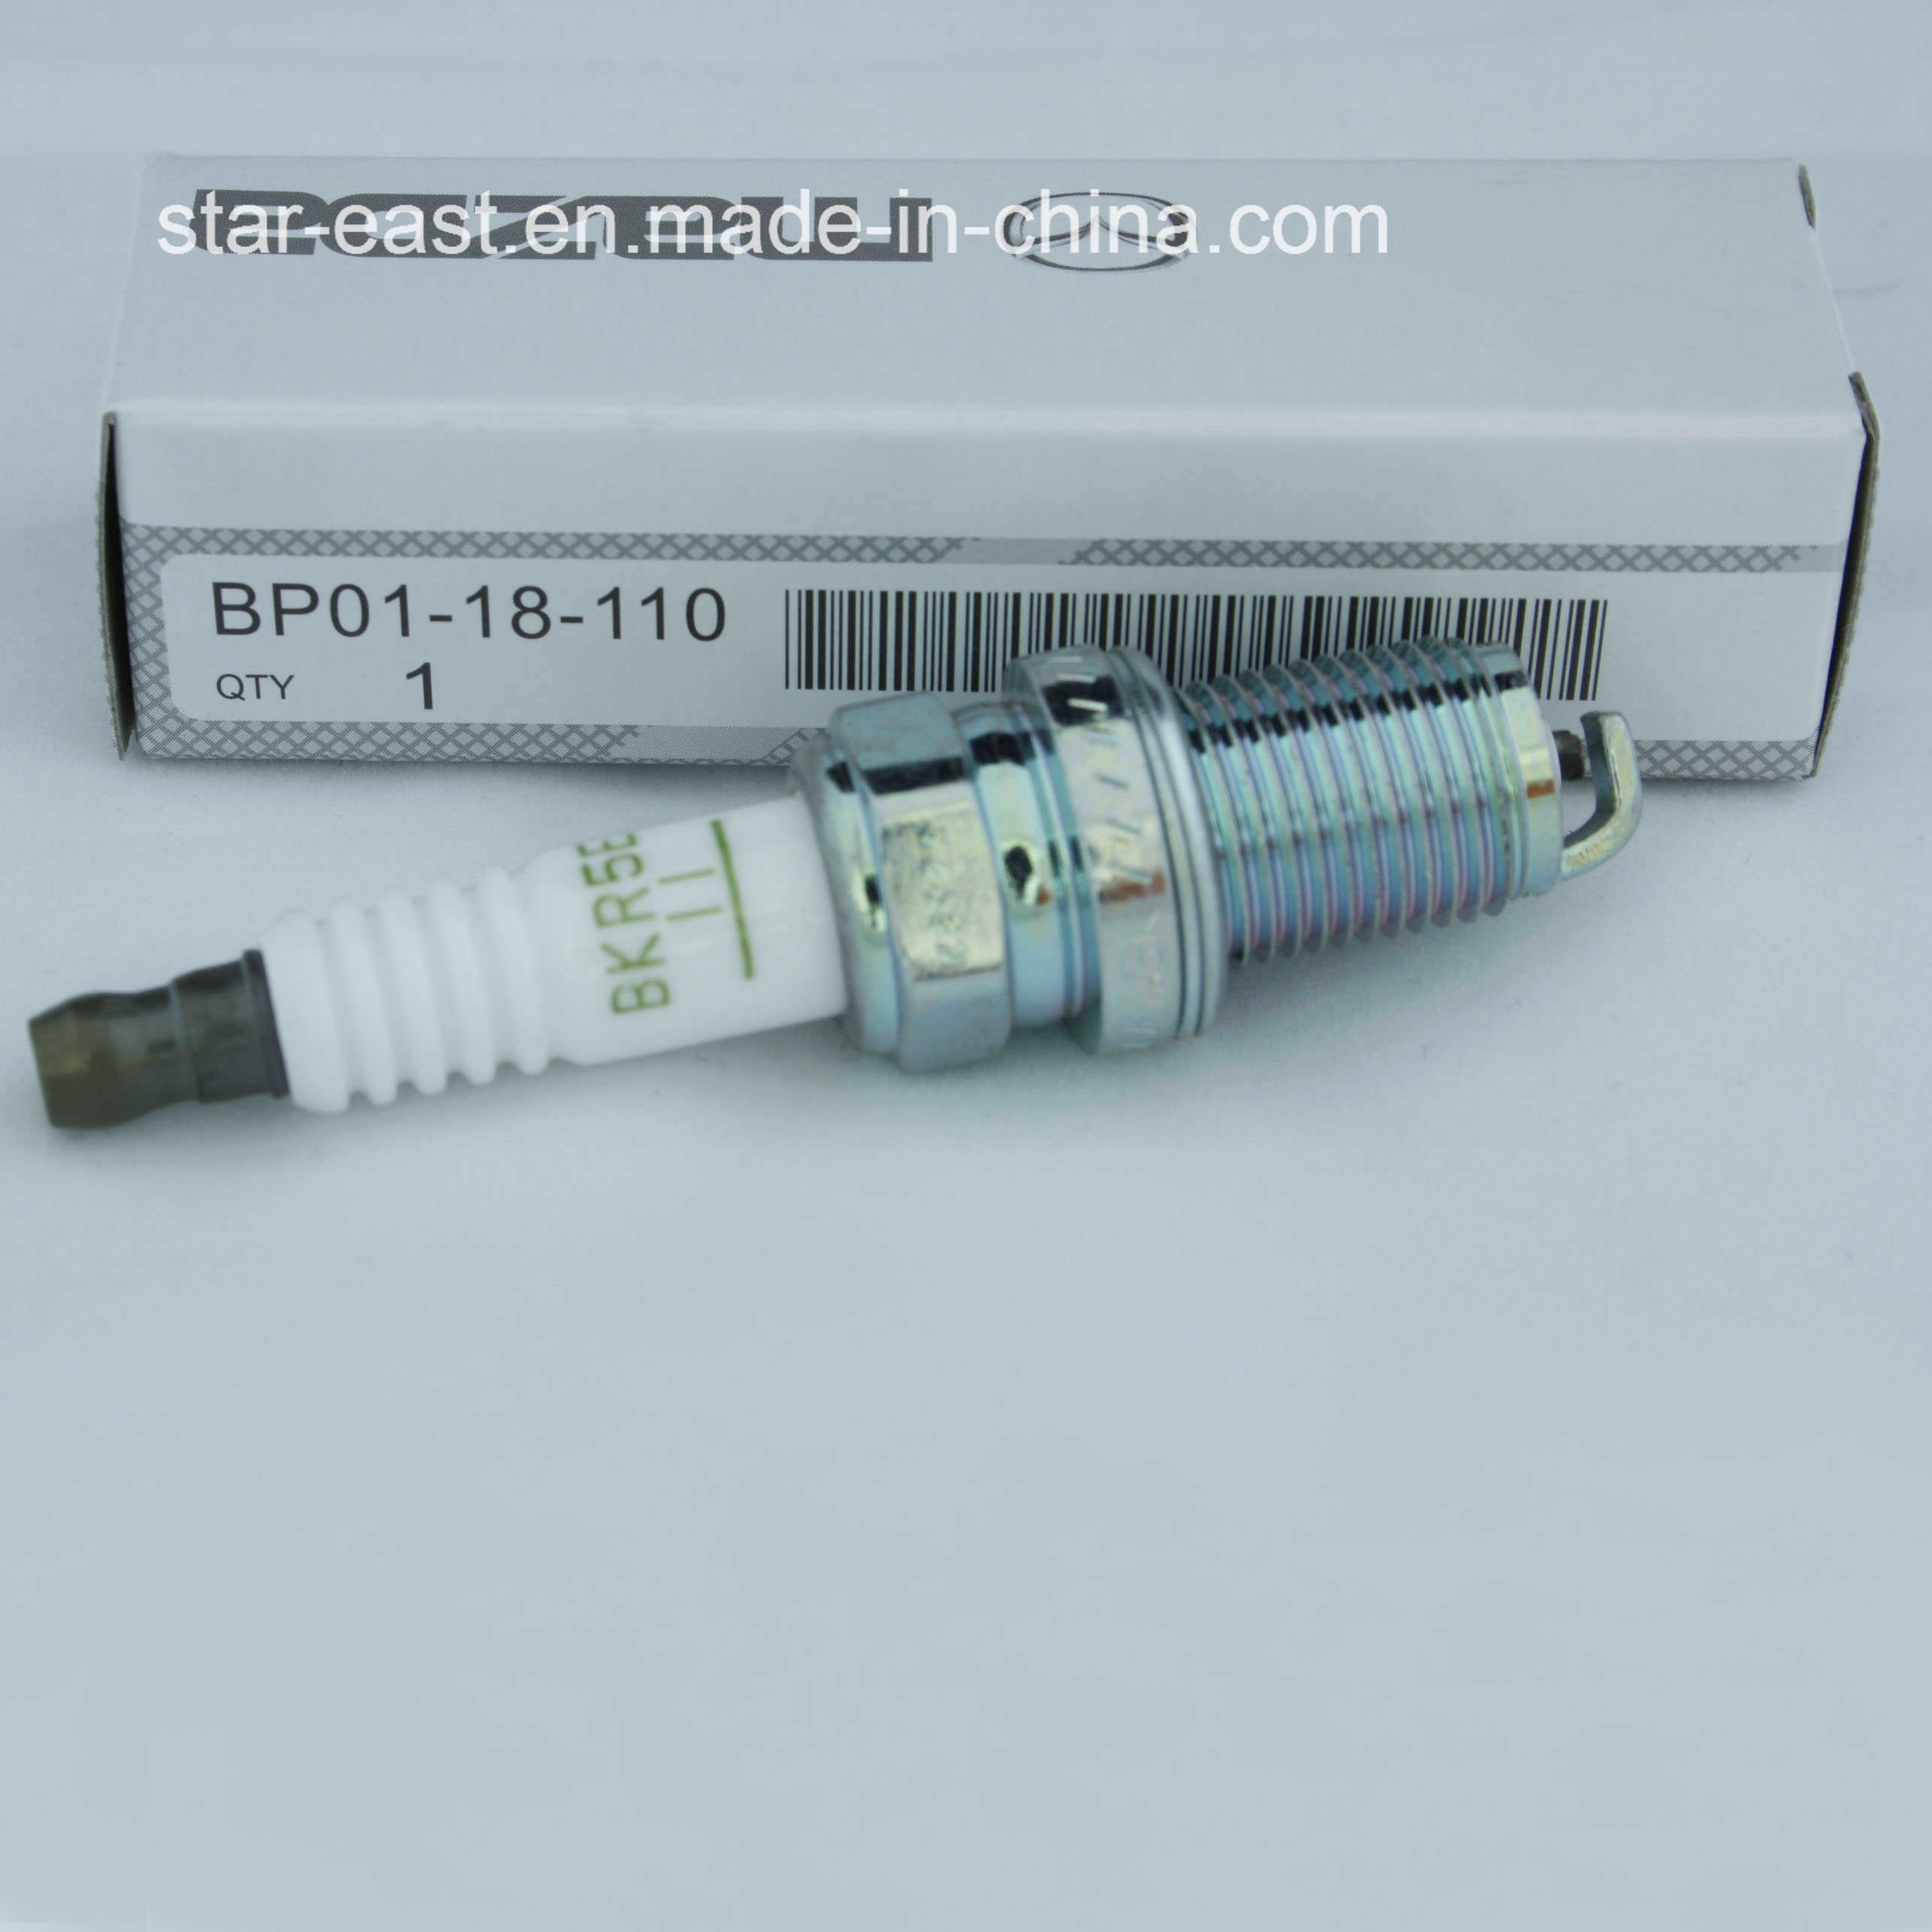 Hight Quality Spark Plug for Bkr5e Ngk Bp01 18110 Use in Mazda